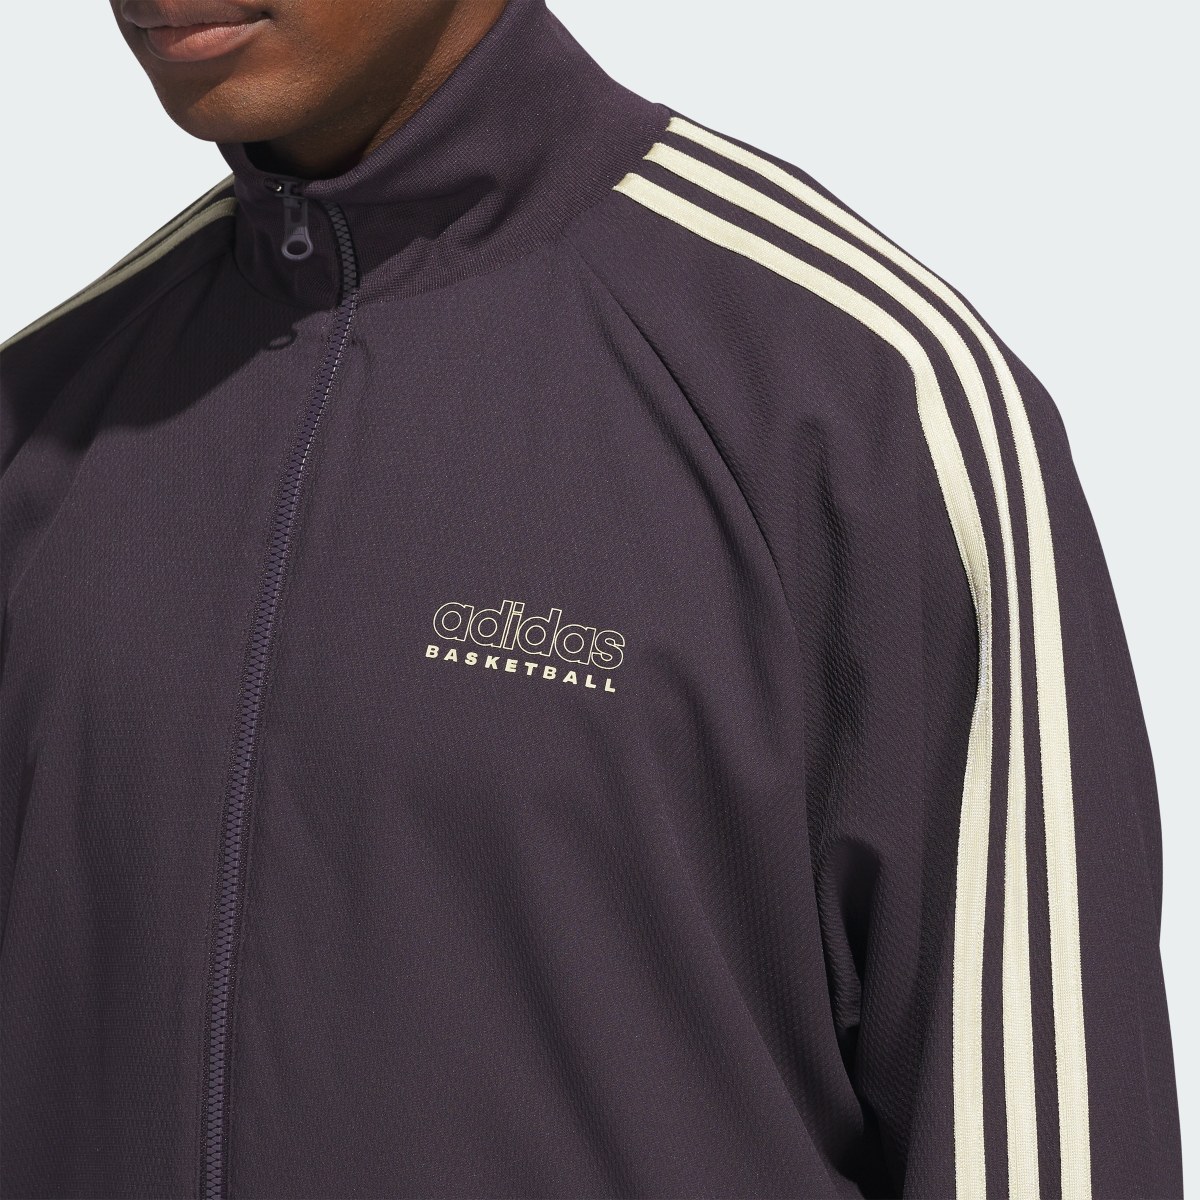 Adidas Basketball Select Jacket. 6